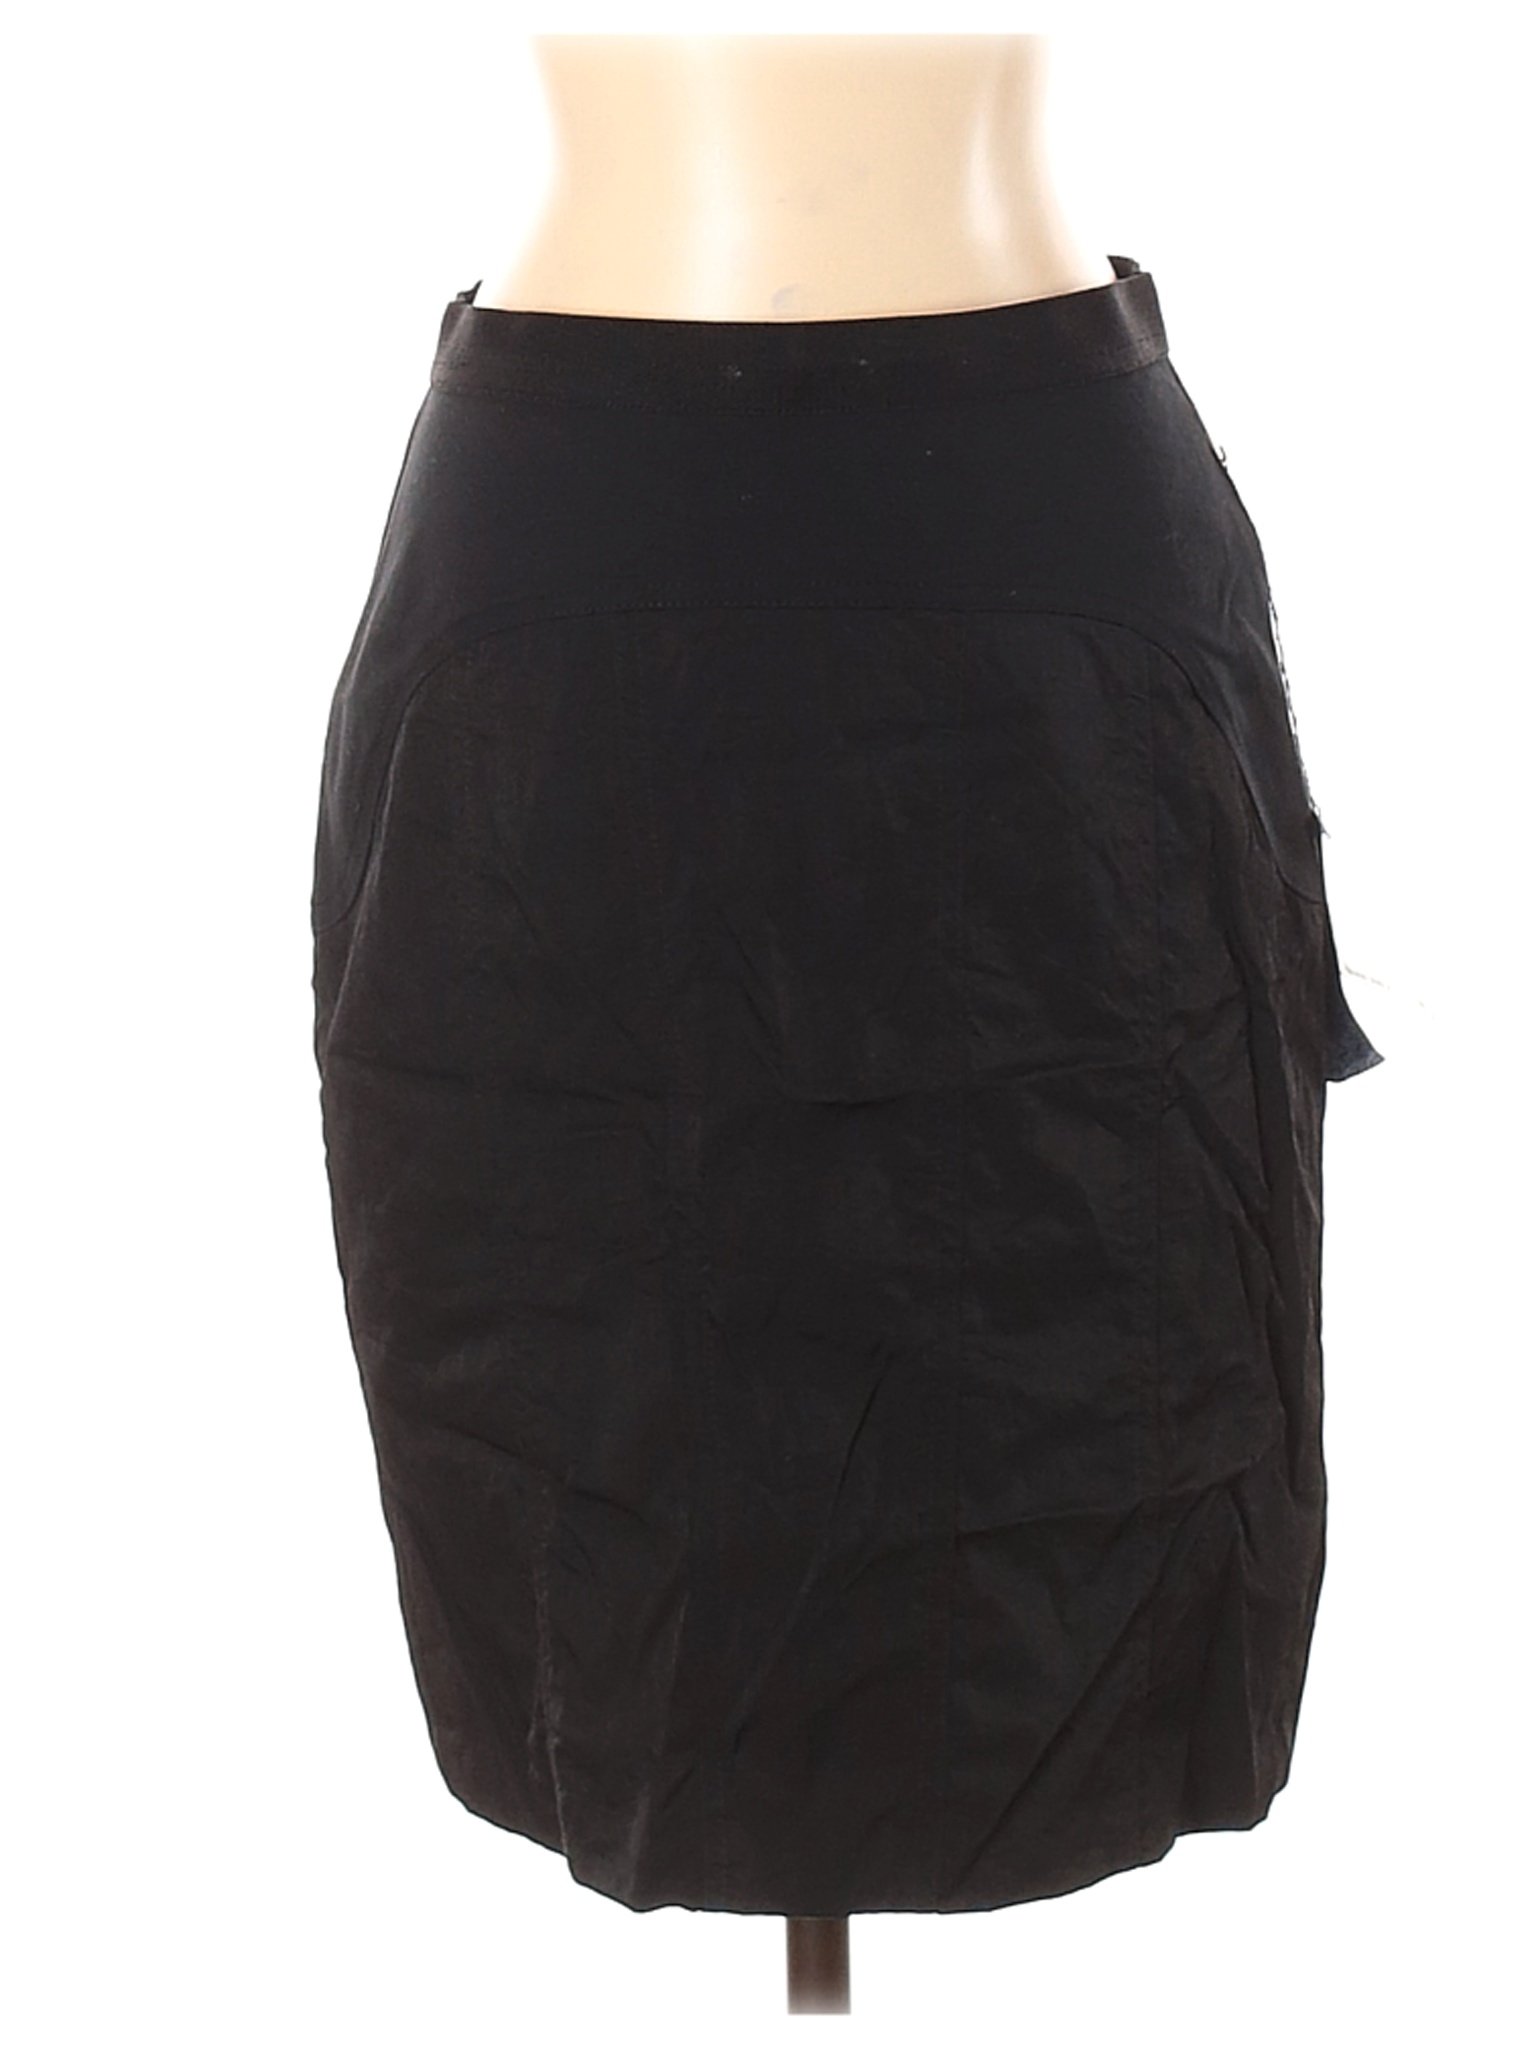 NWT Simply Vera Vera Wang Women Black Casual Skirt 2 | eBay